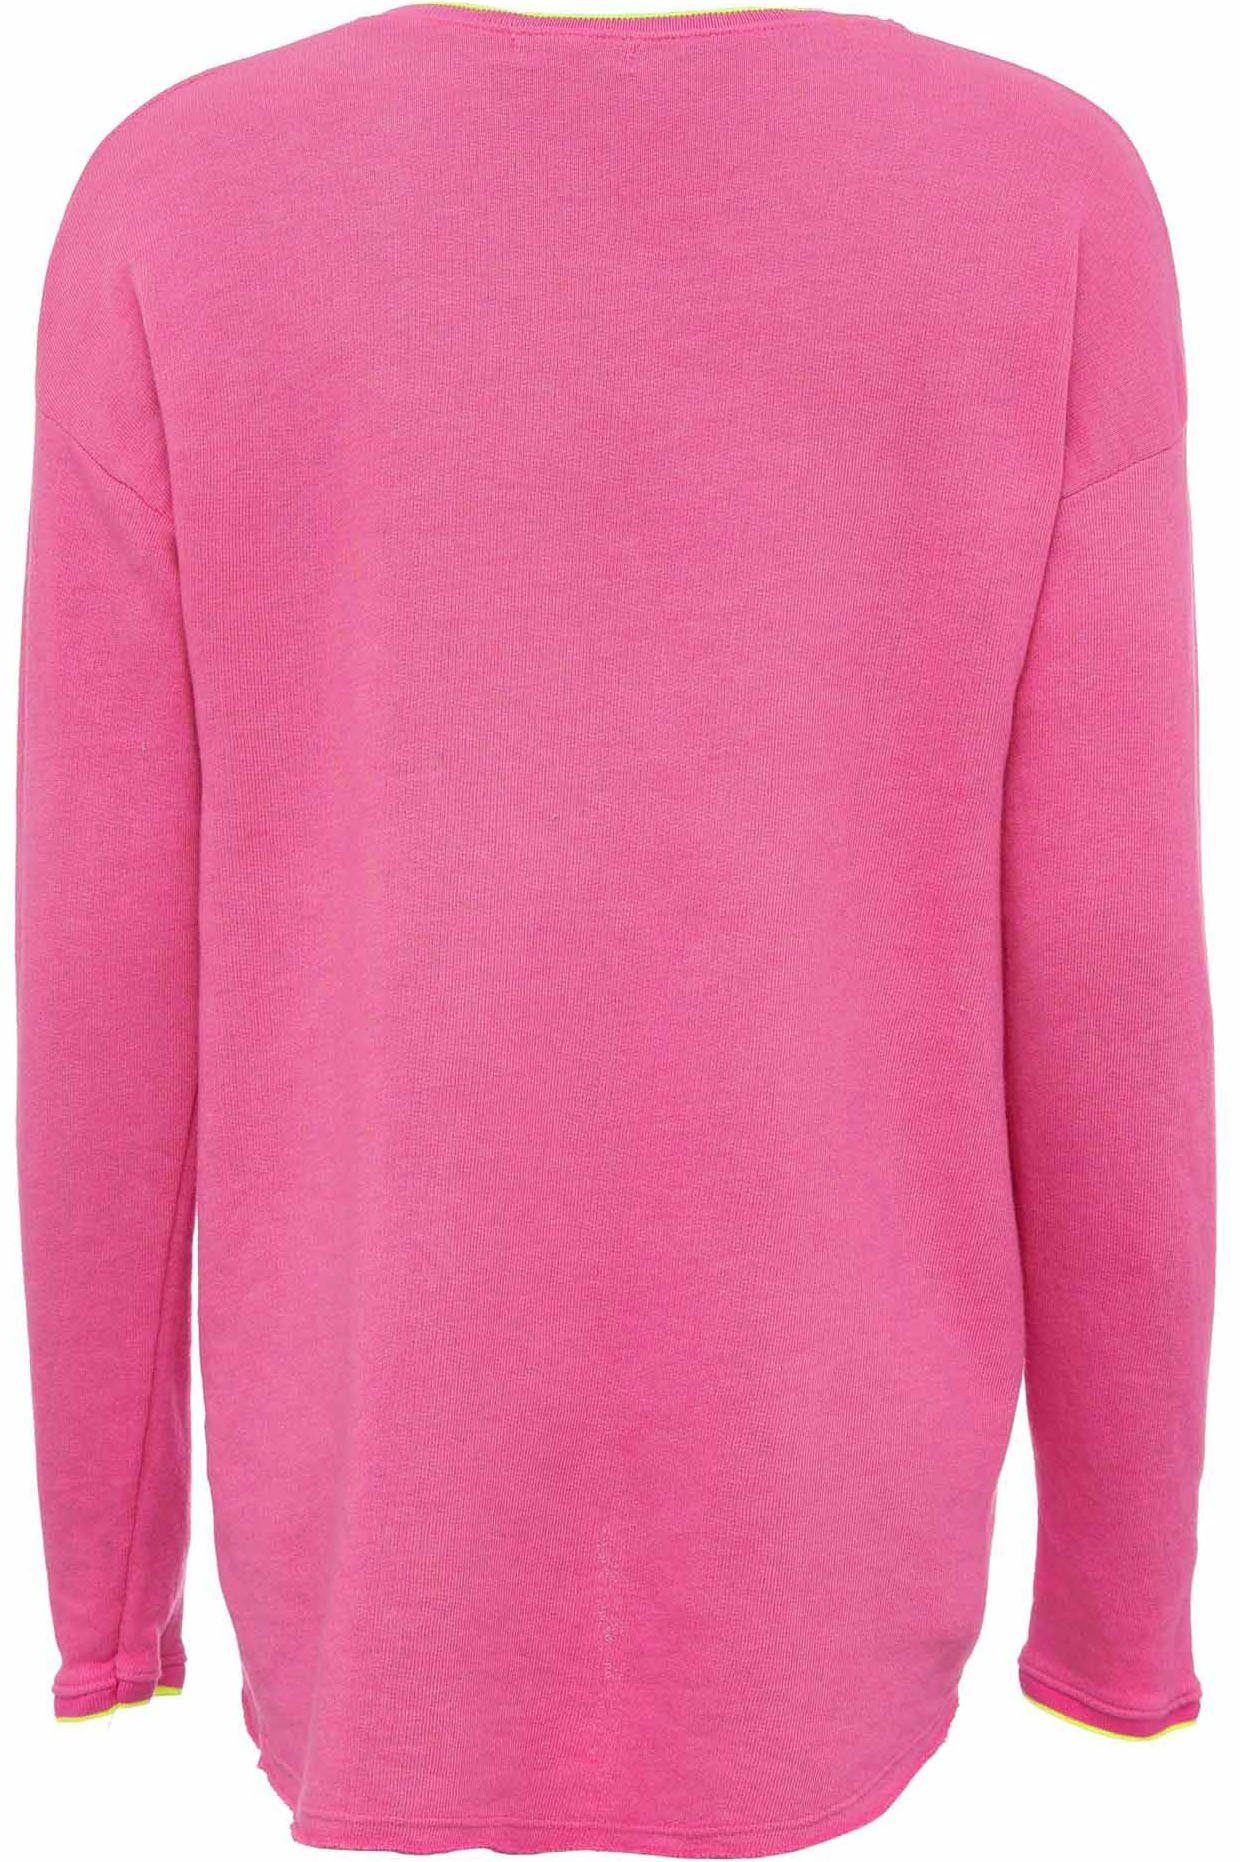 Sweatshirt Kontrastnaht V-Ausschnitt mit Zwillingsherz pink